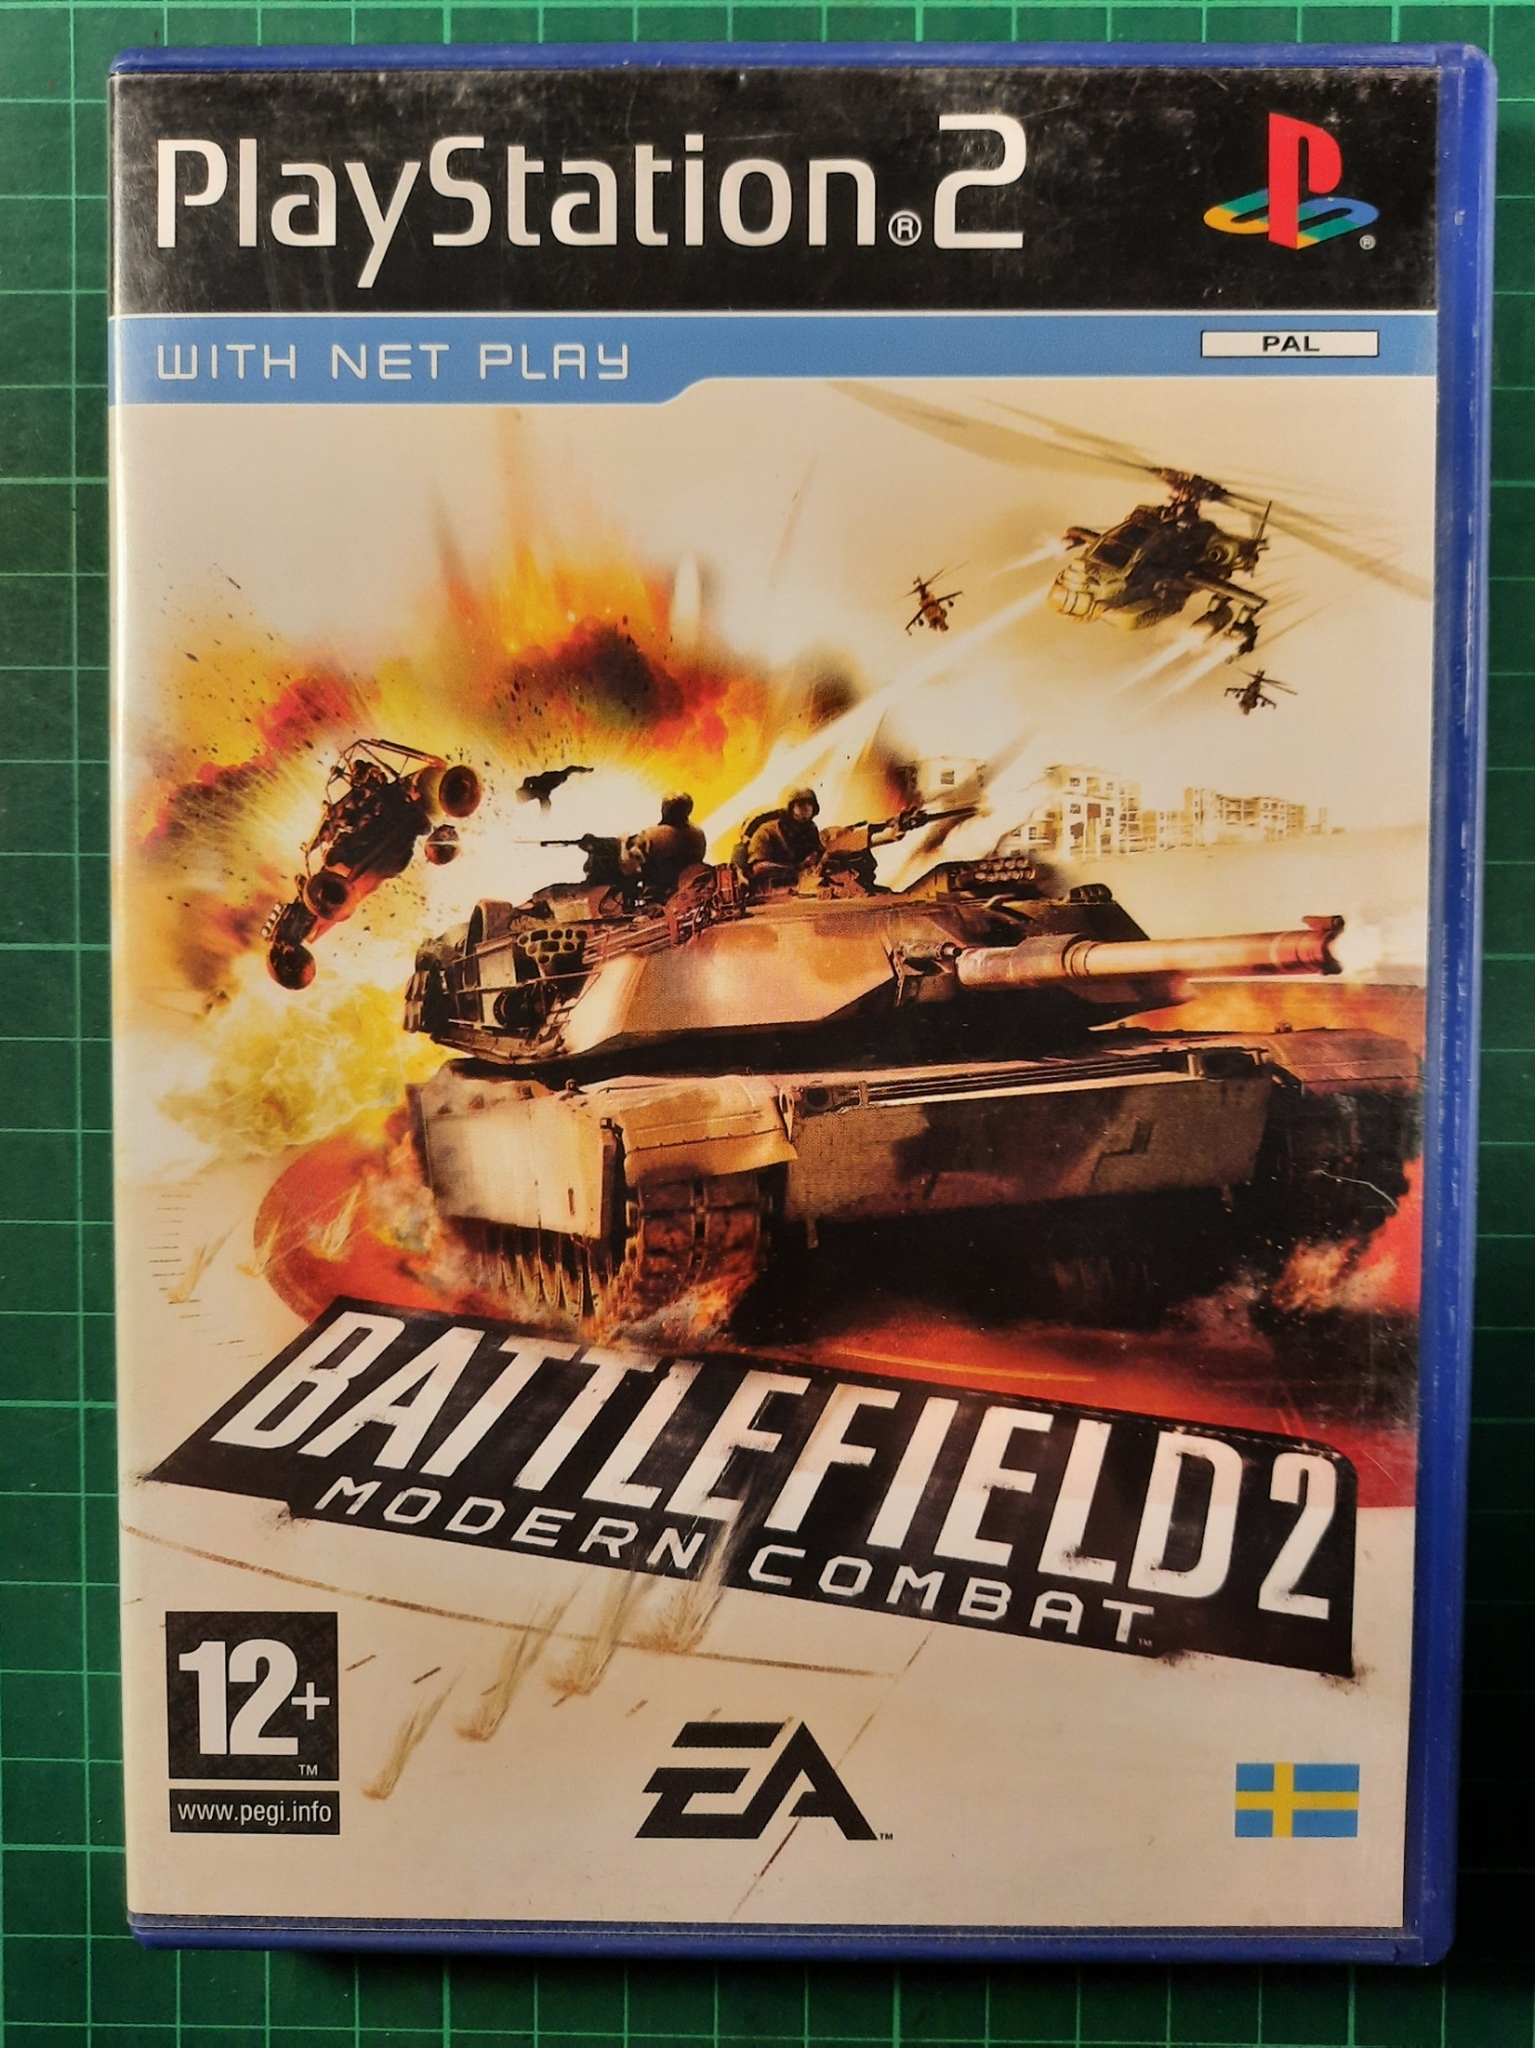 Playstation 2 : Battlefield 2 modern combat